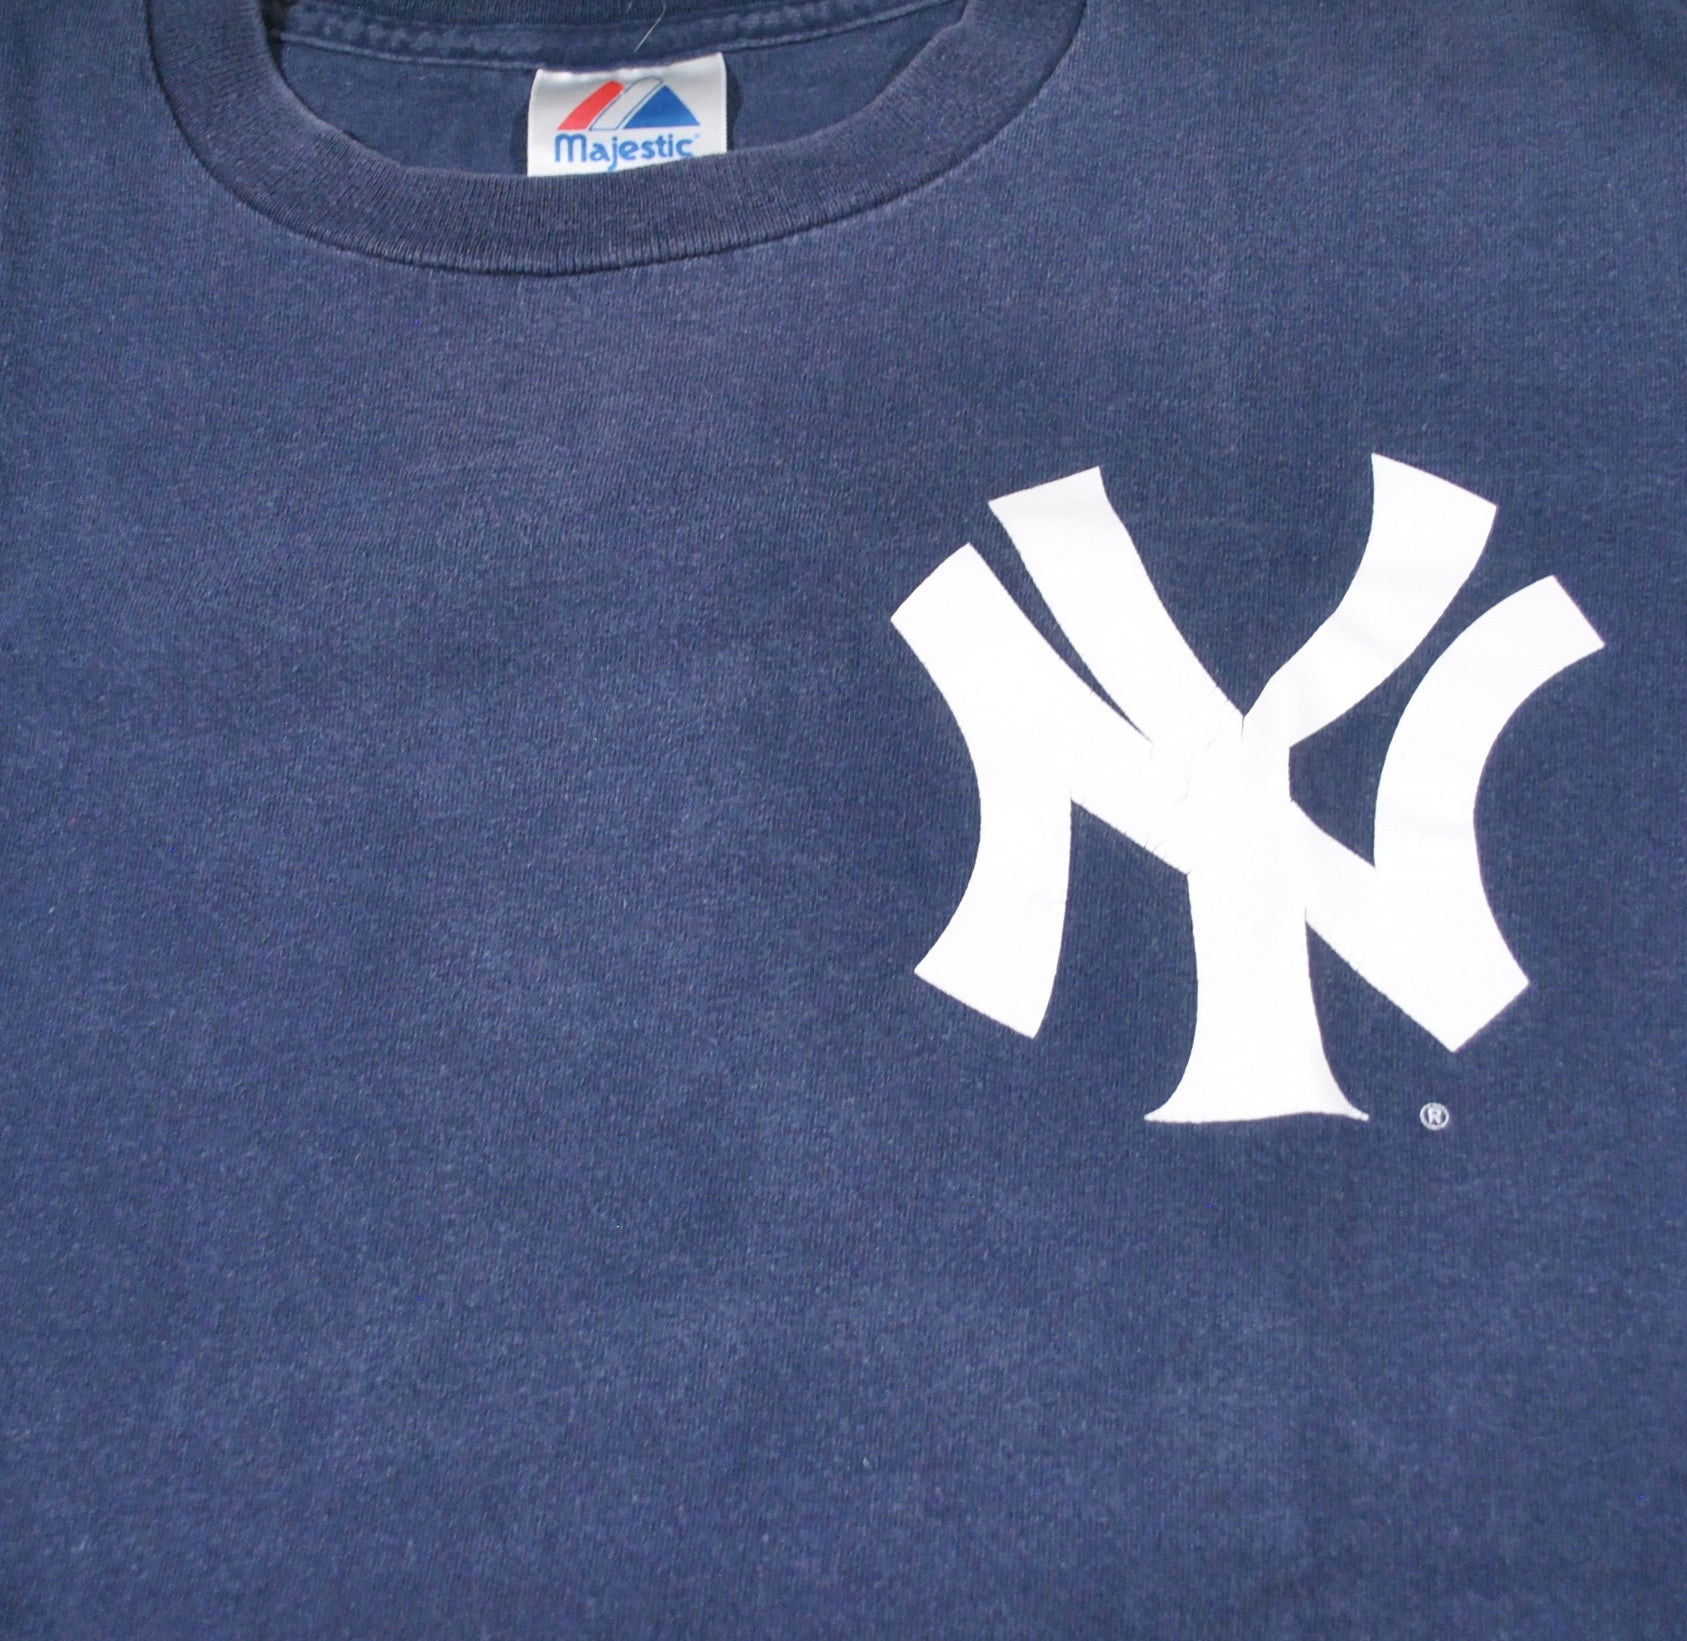 Yankees Savages Shirt Top Sellers, SAVE 57% 